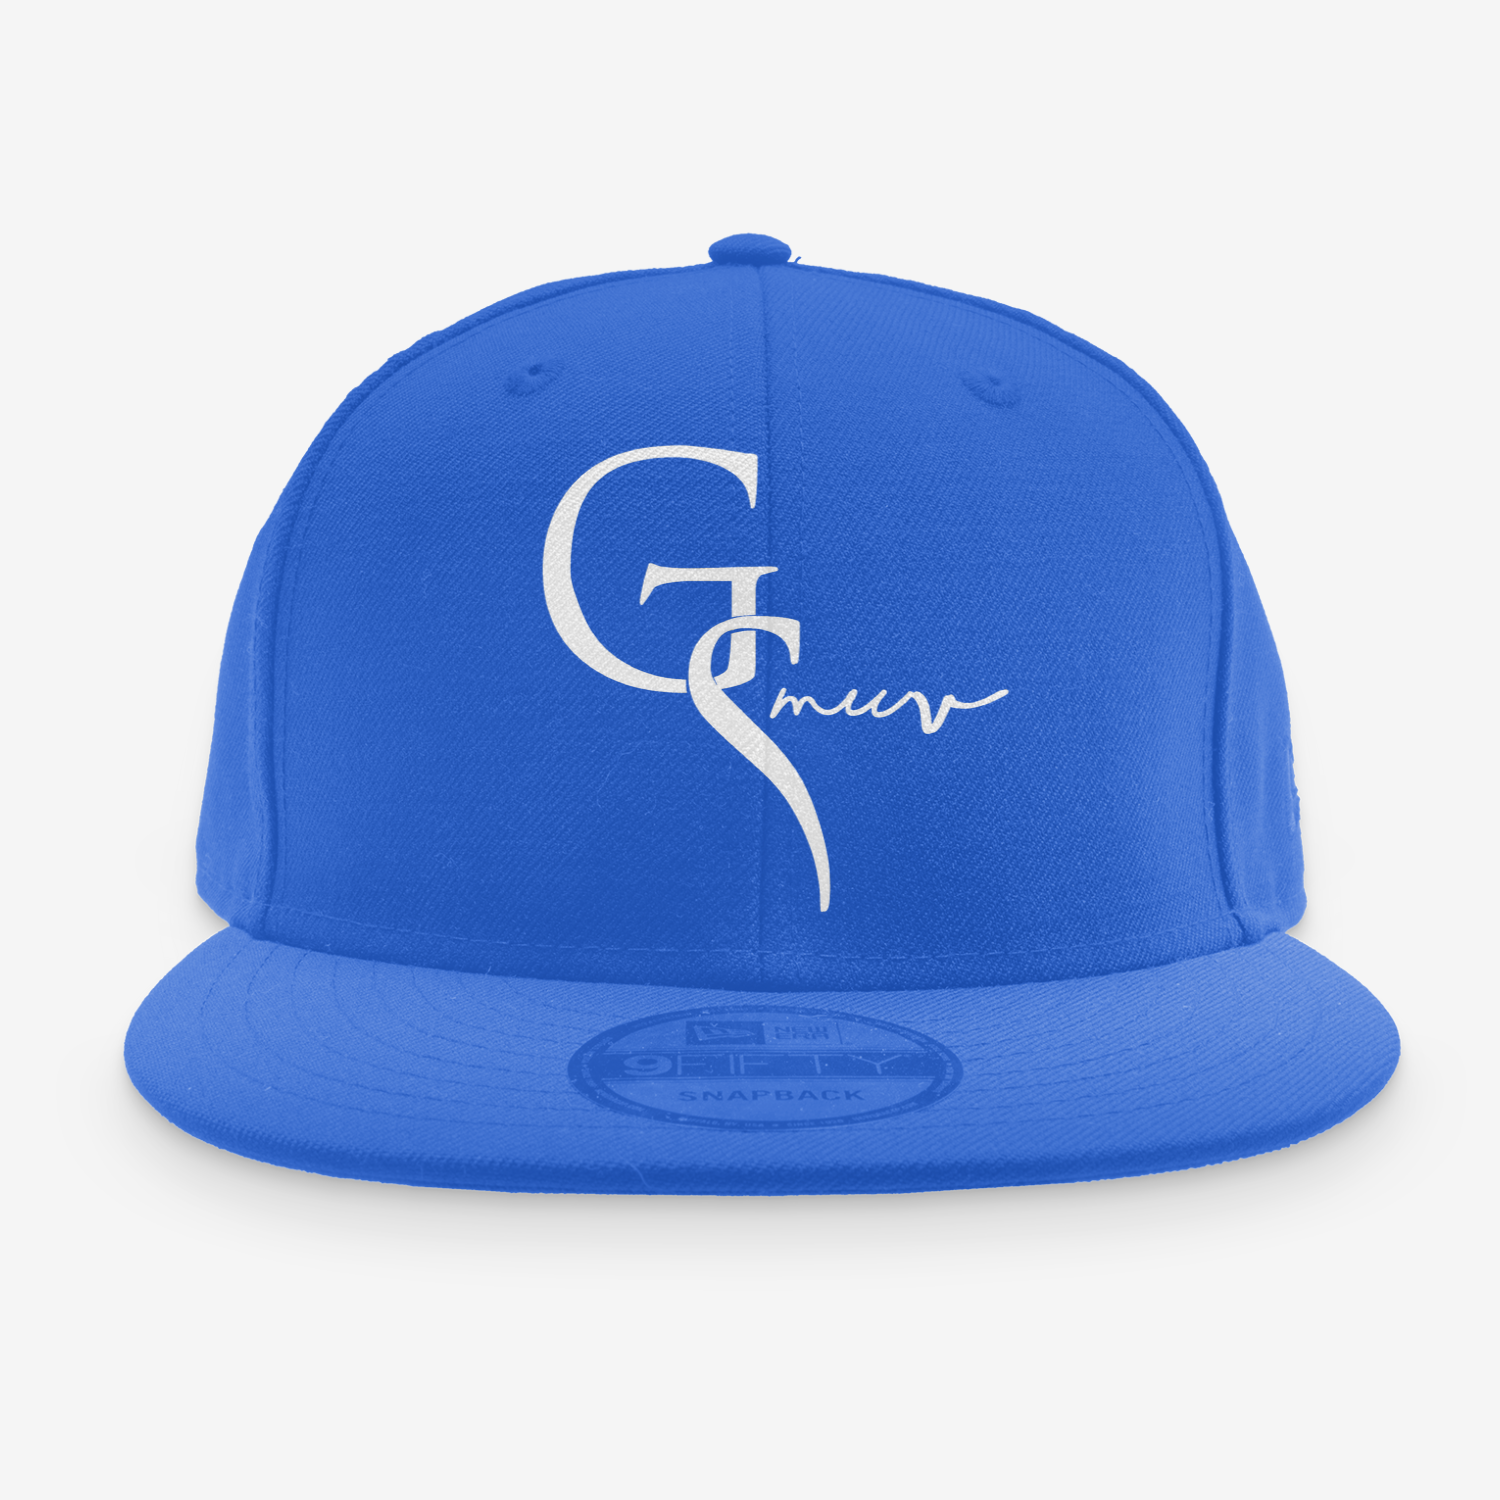 Royal Blue New Era hat with white logo of GSMUV